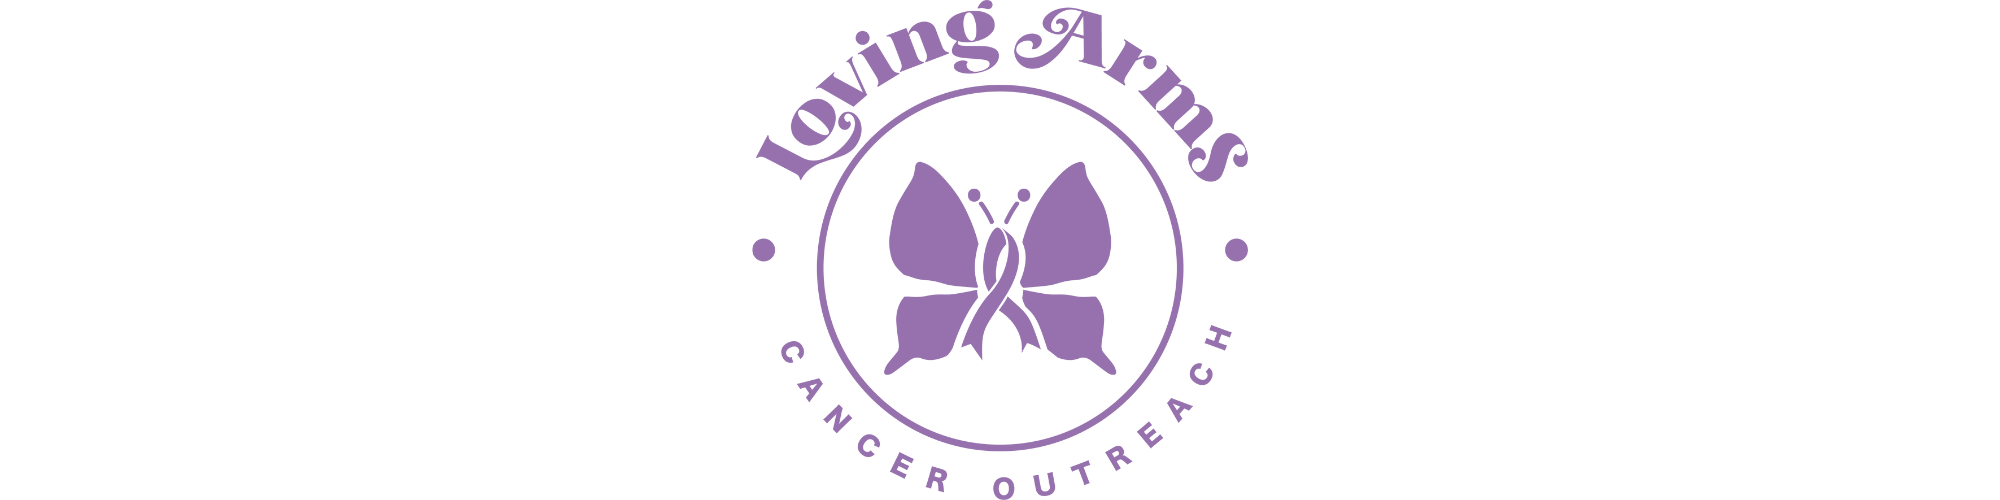 Loving Arms Cancer Outreach